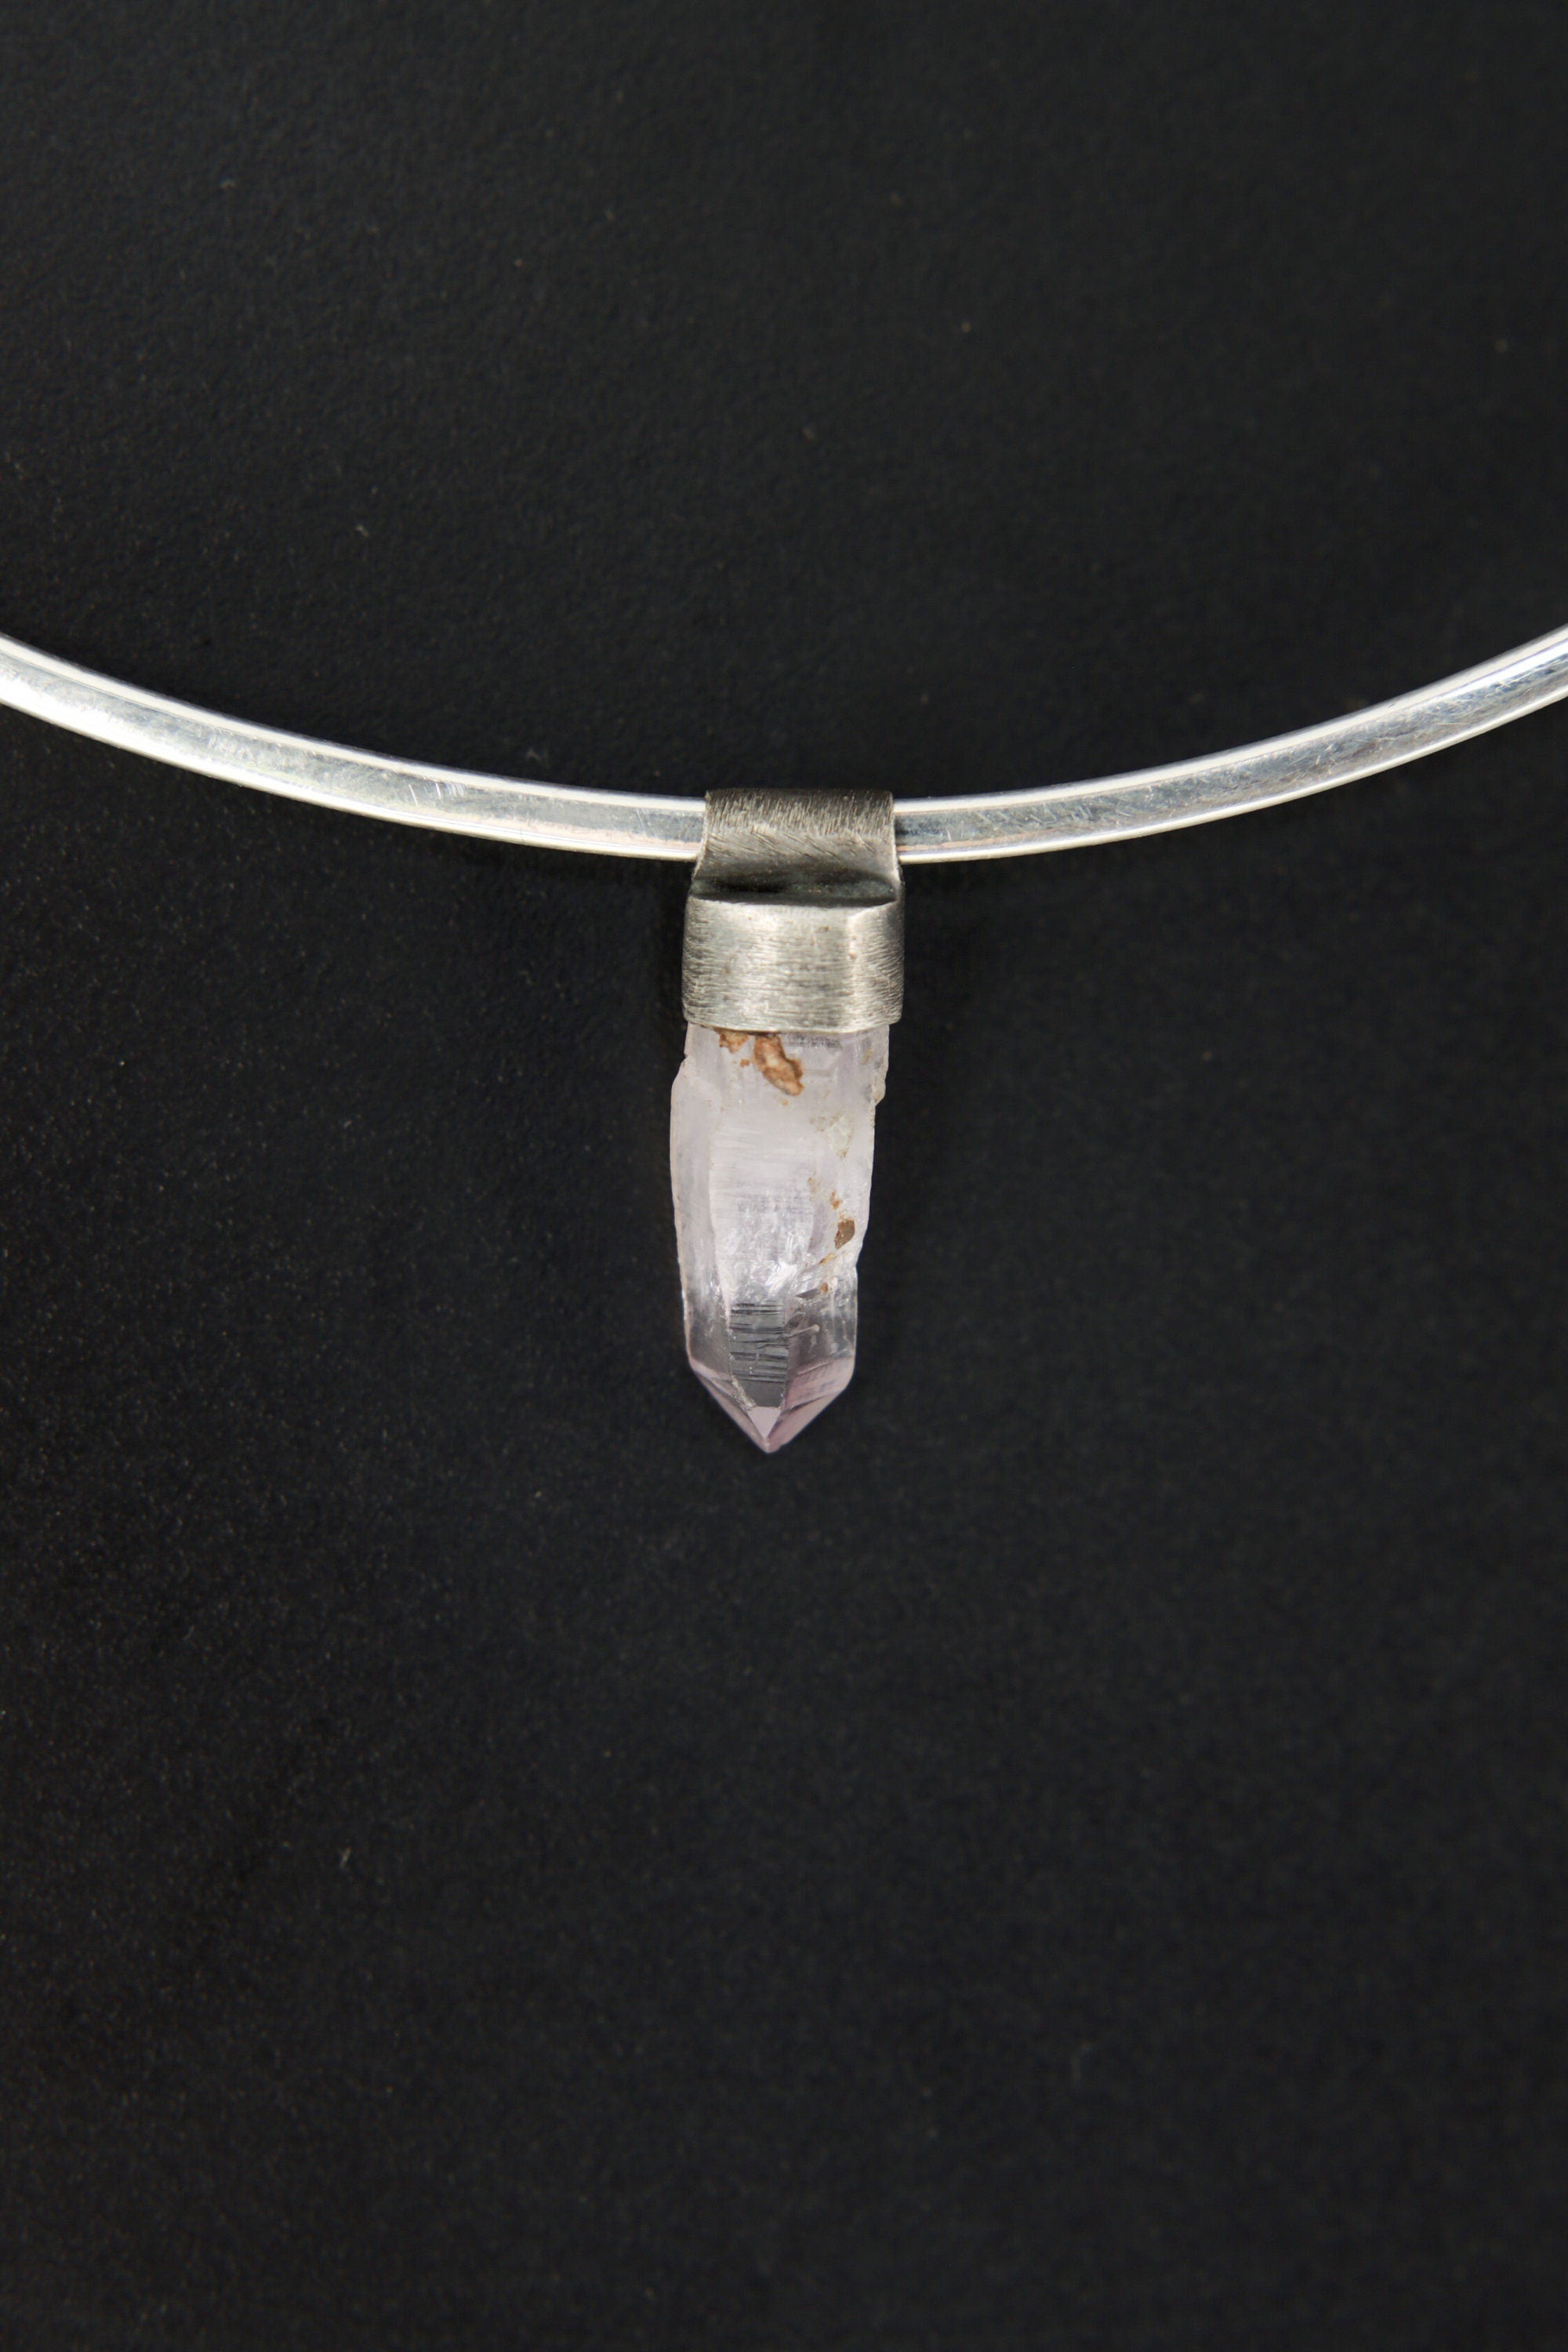 Vera Cruz amethyst - Stack Pendant - Organic Textured 925 Sterling Silver - Crystal Necklace - NO/01